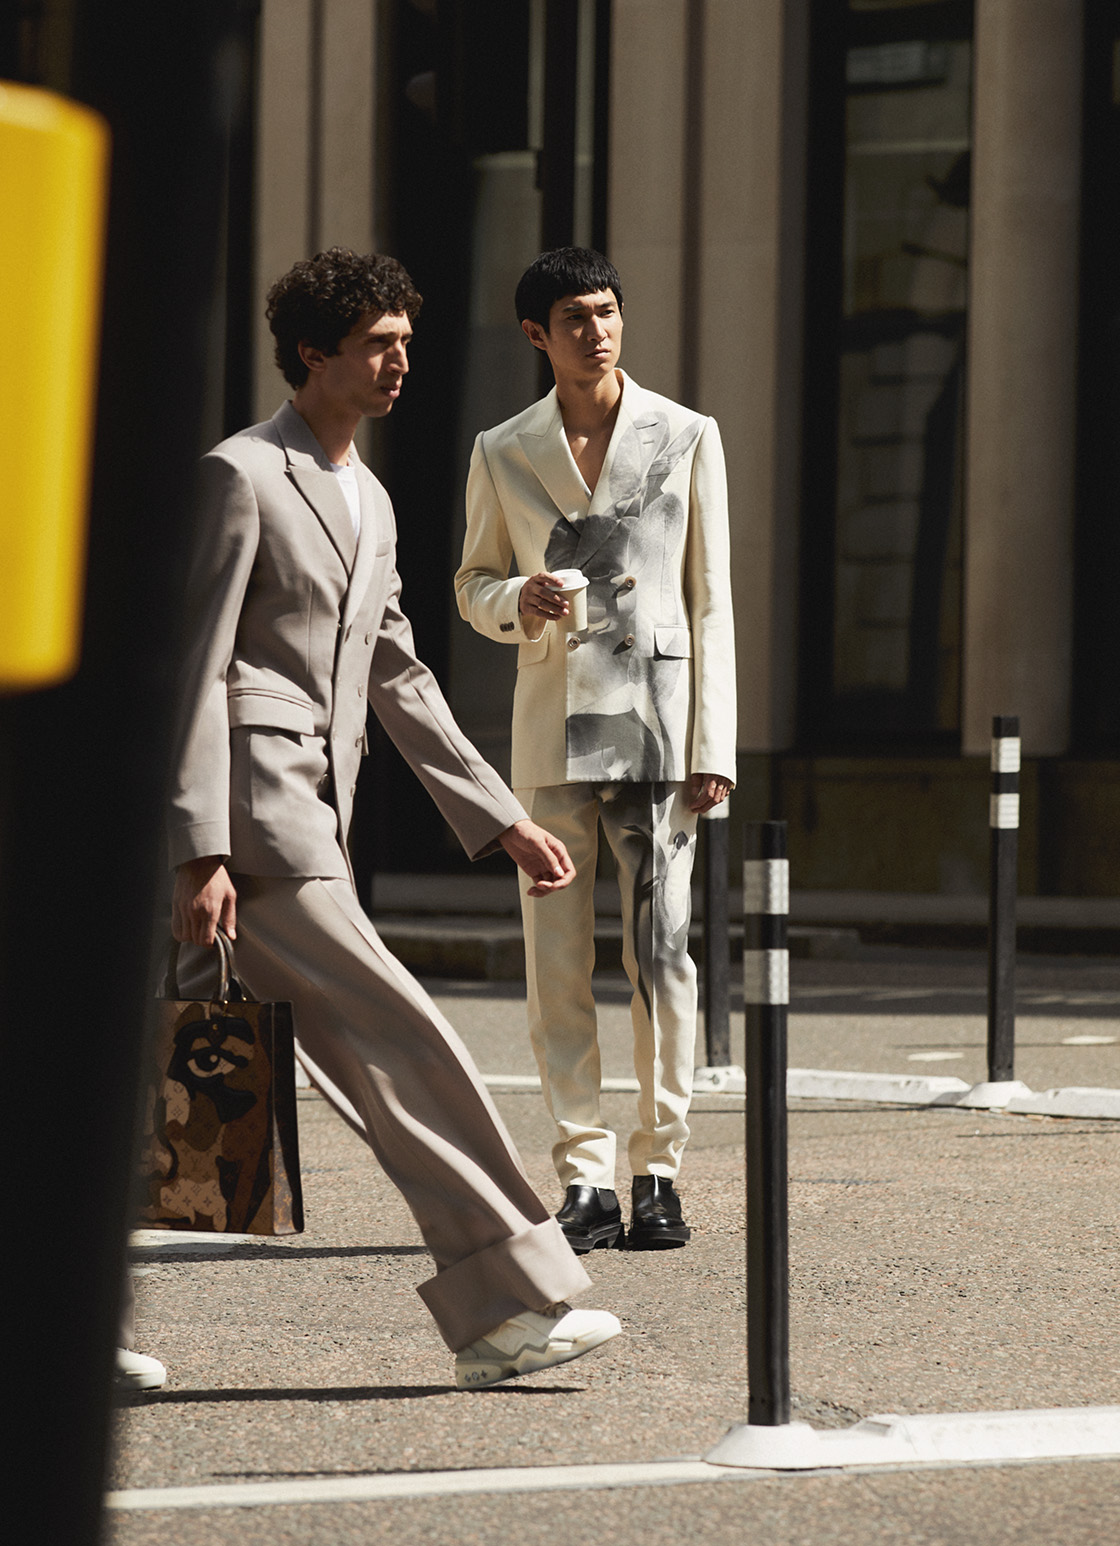 Two men walking around the street wearing monochrome suits